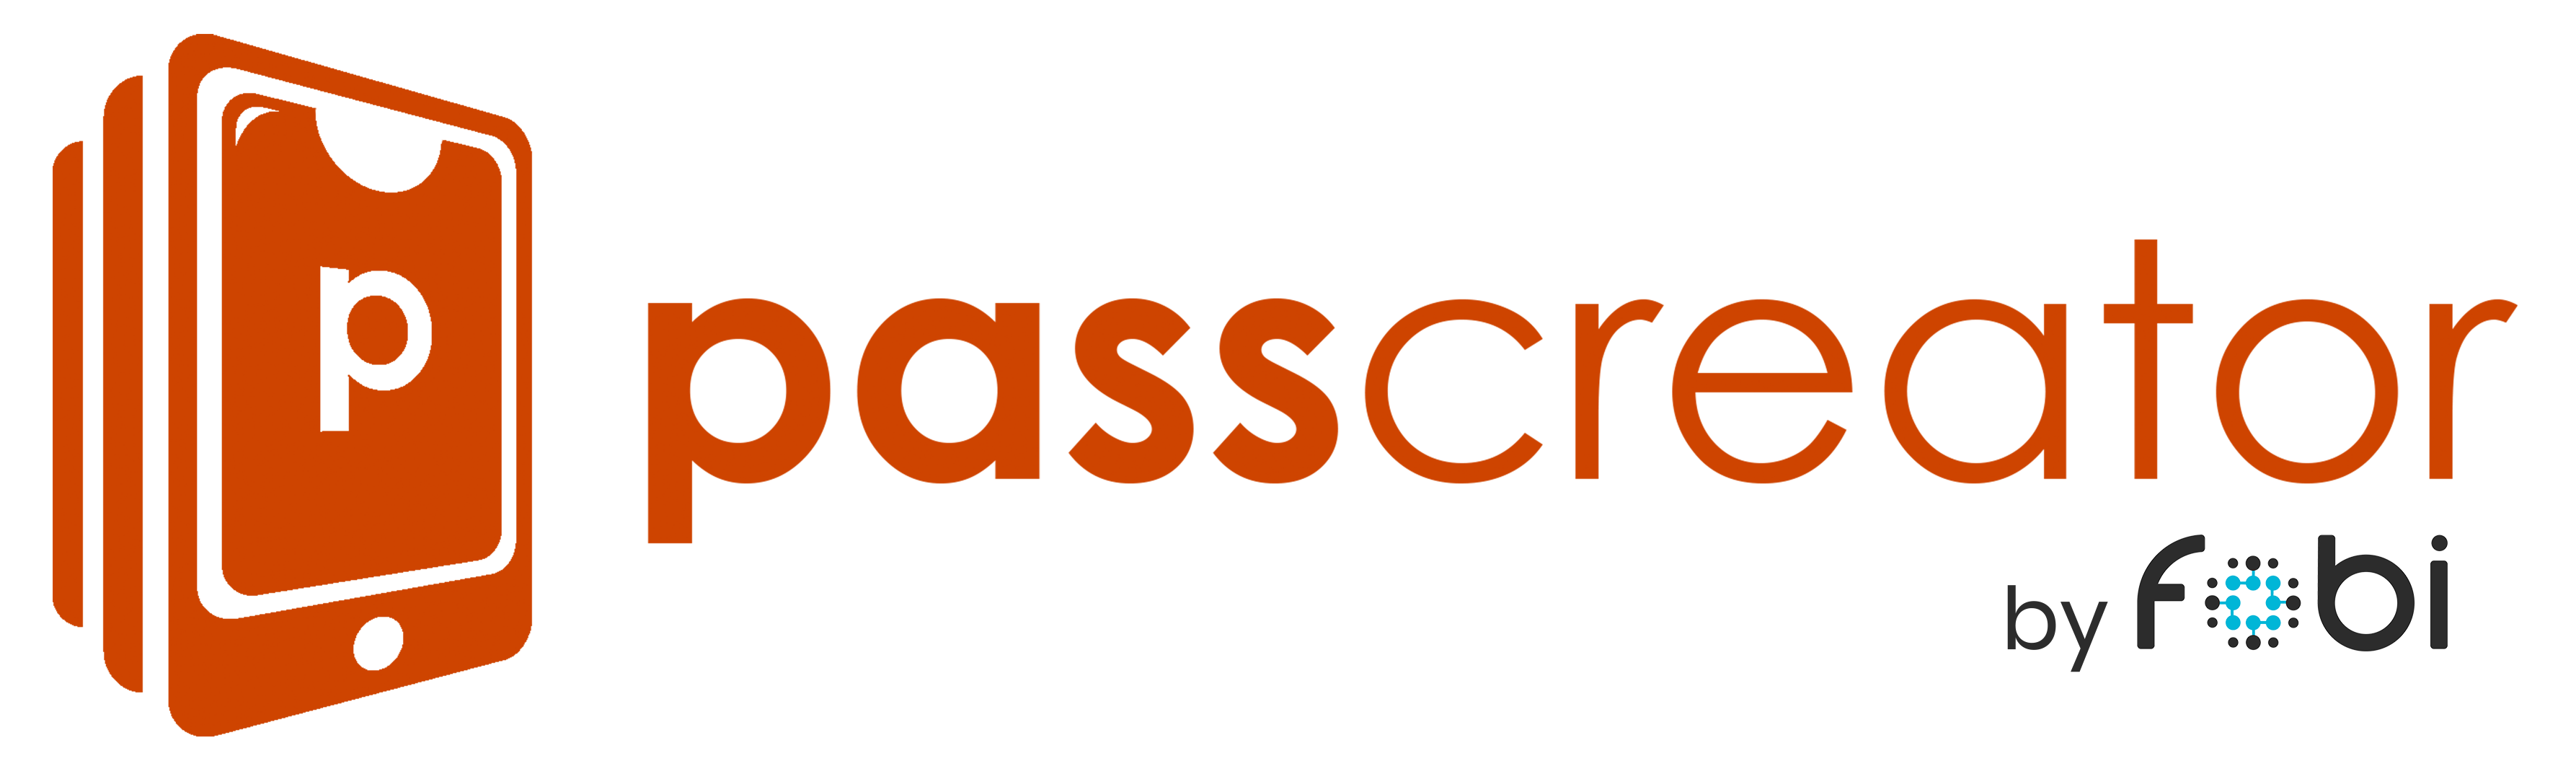 Passcreator Menu Logo